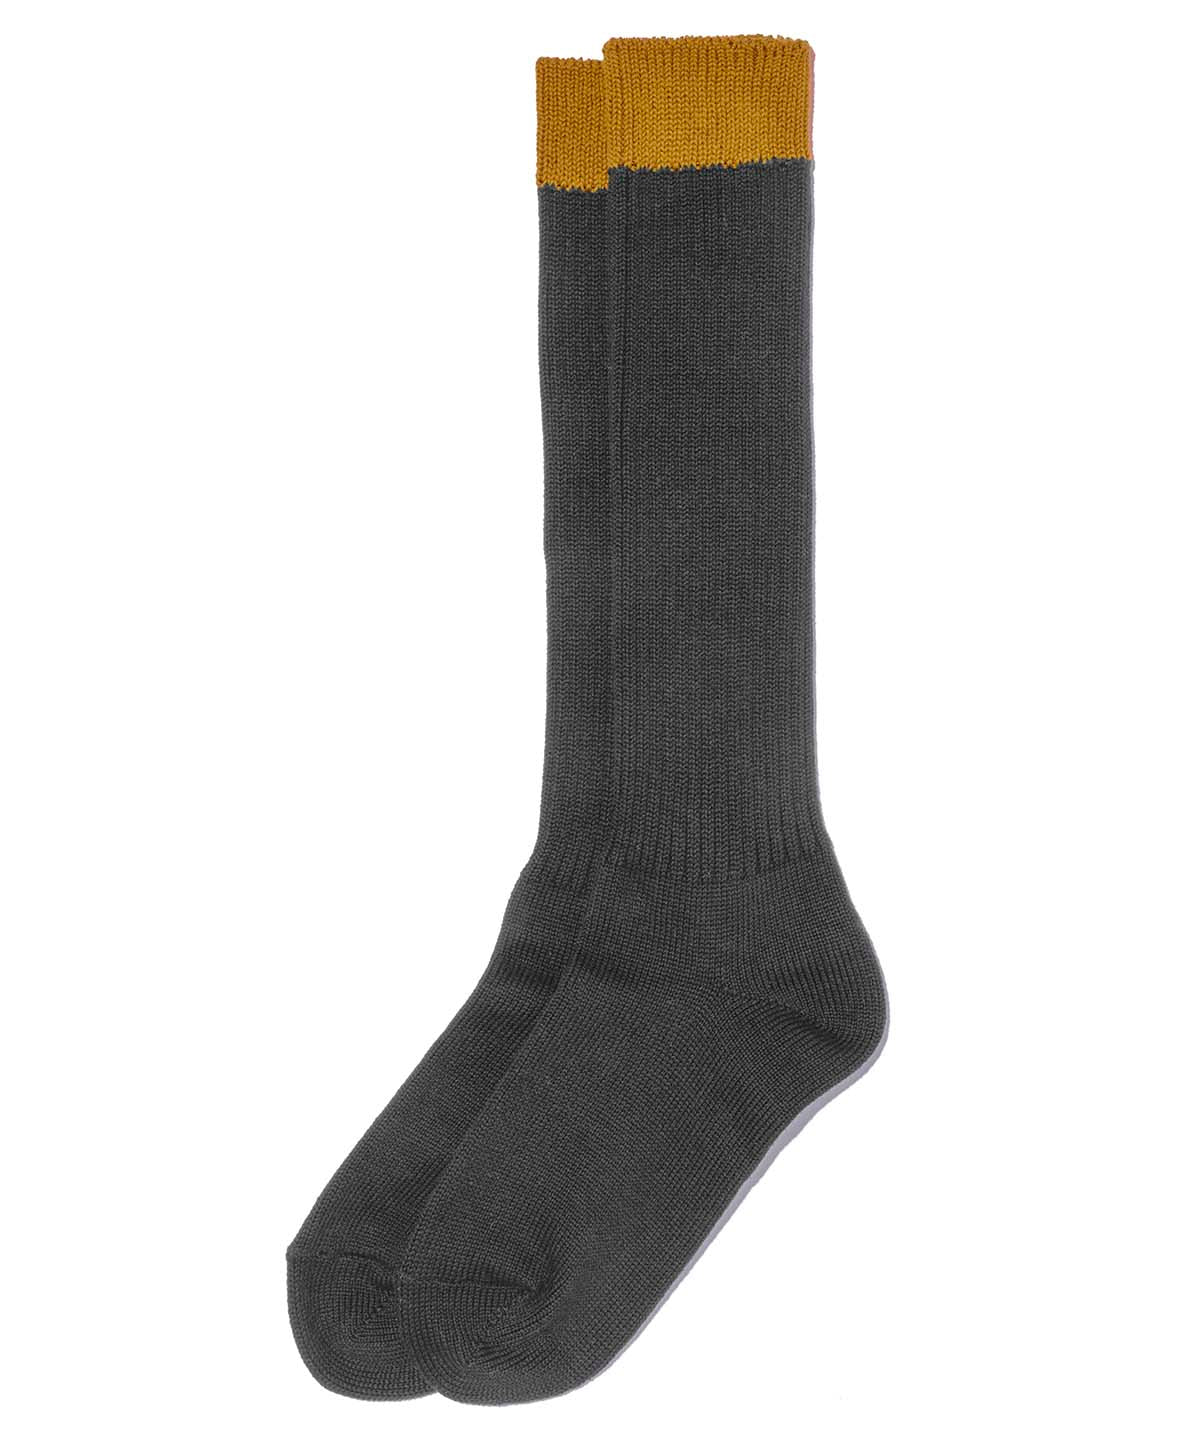 Stiefel Socken / Holzkohlegrau / Gelb